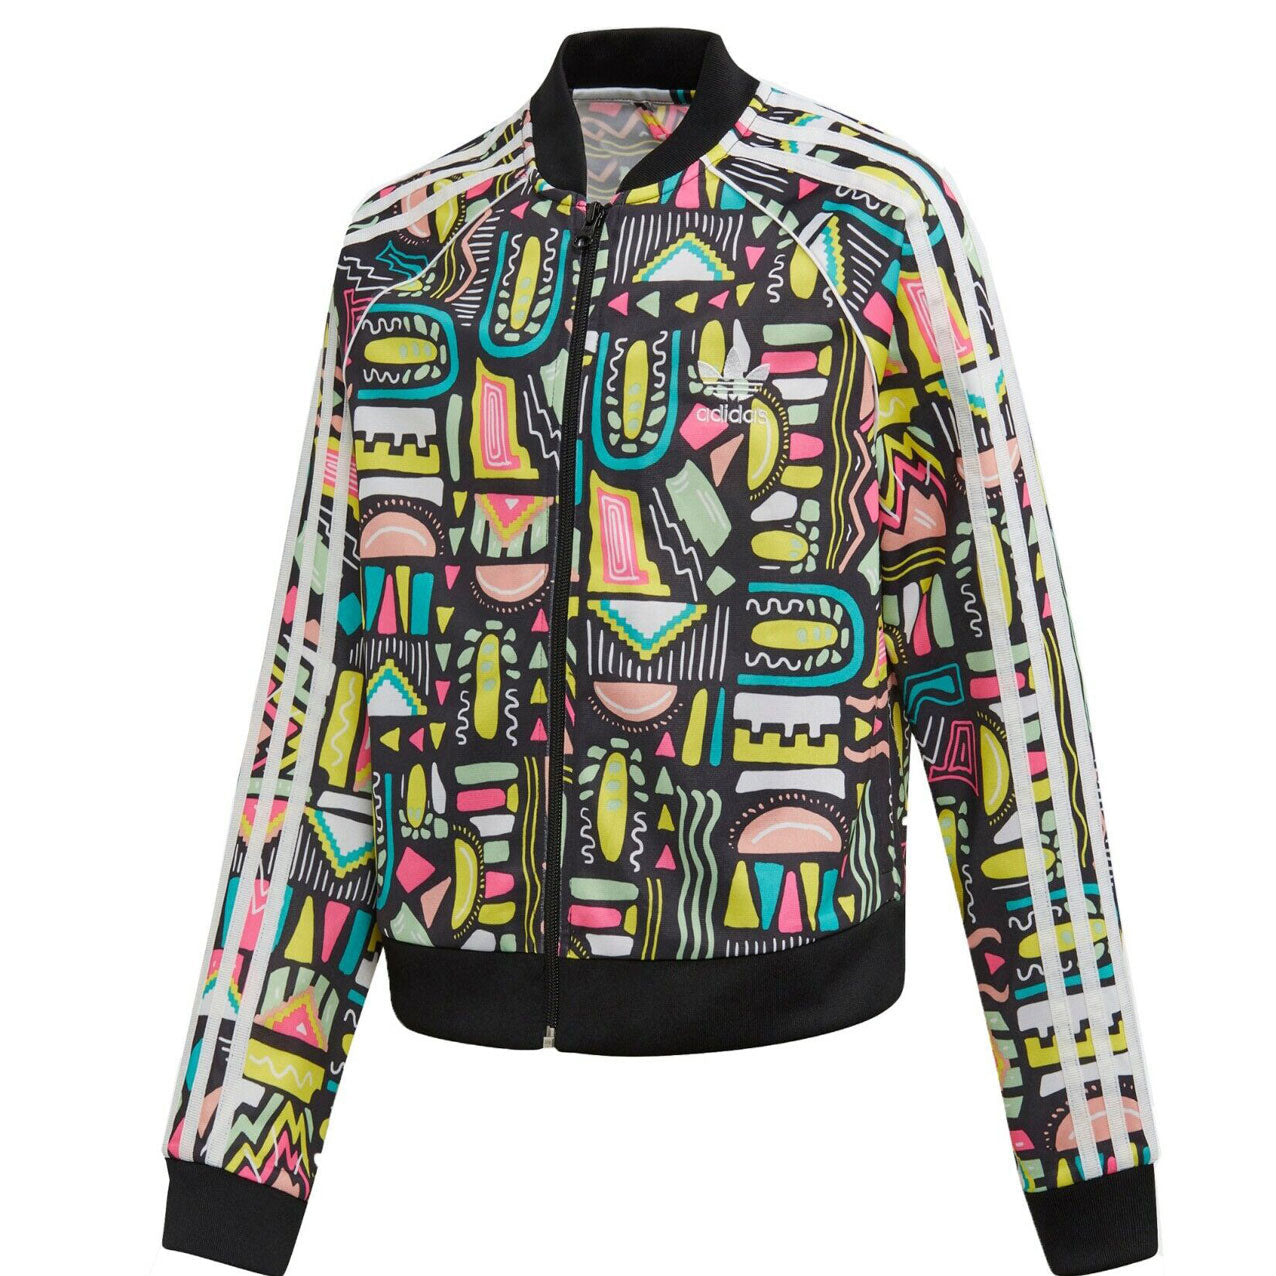 Adidas Originals Jacket Girls Cropped SST Track Jacket Urban Street jacket - MRGOUTLETS